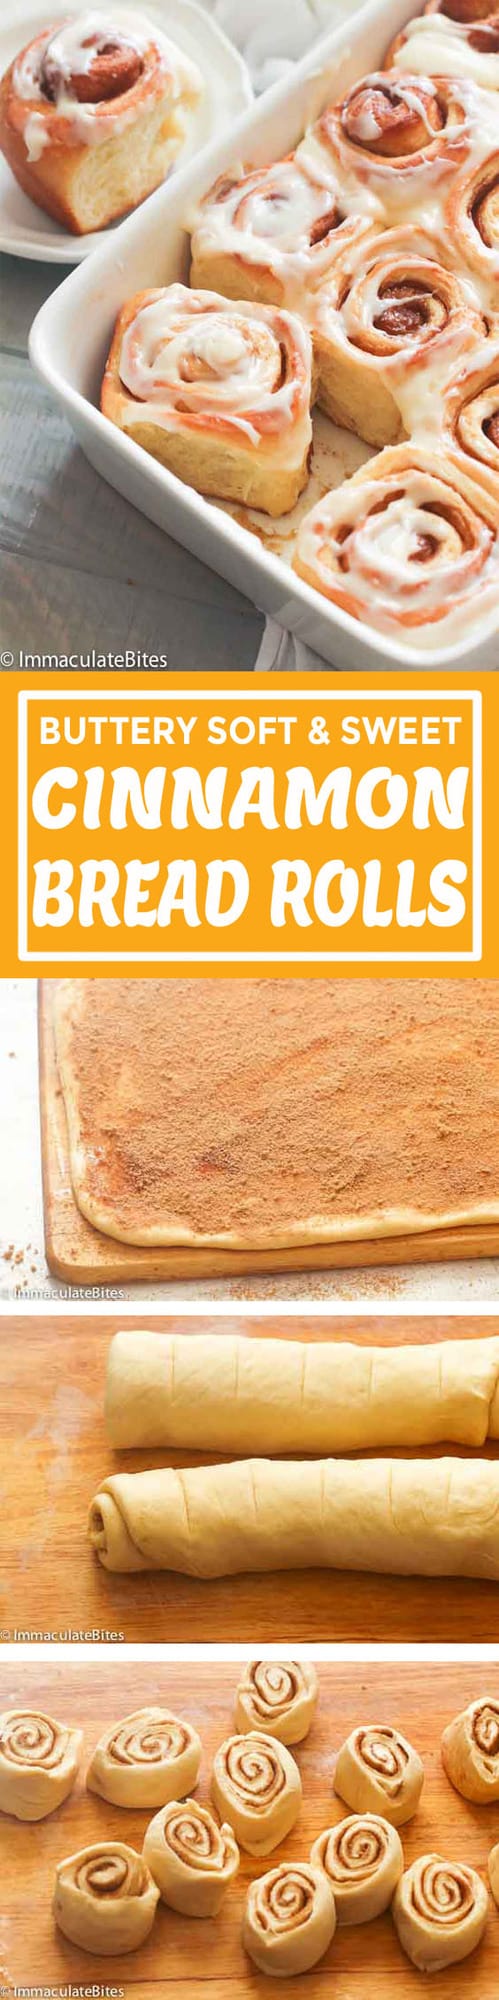 Cinnamon Bread Rolls